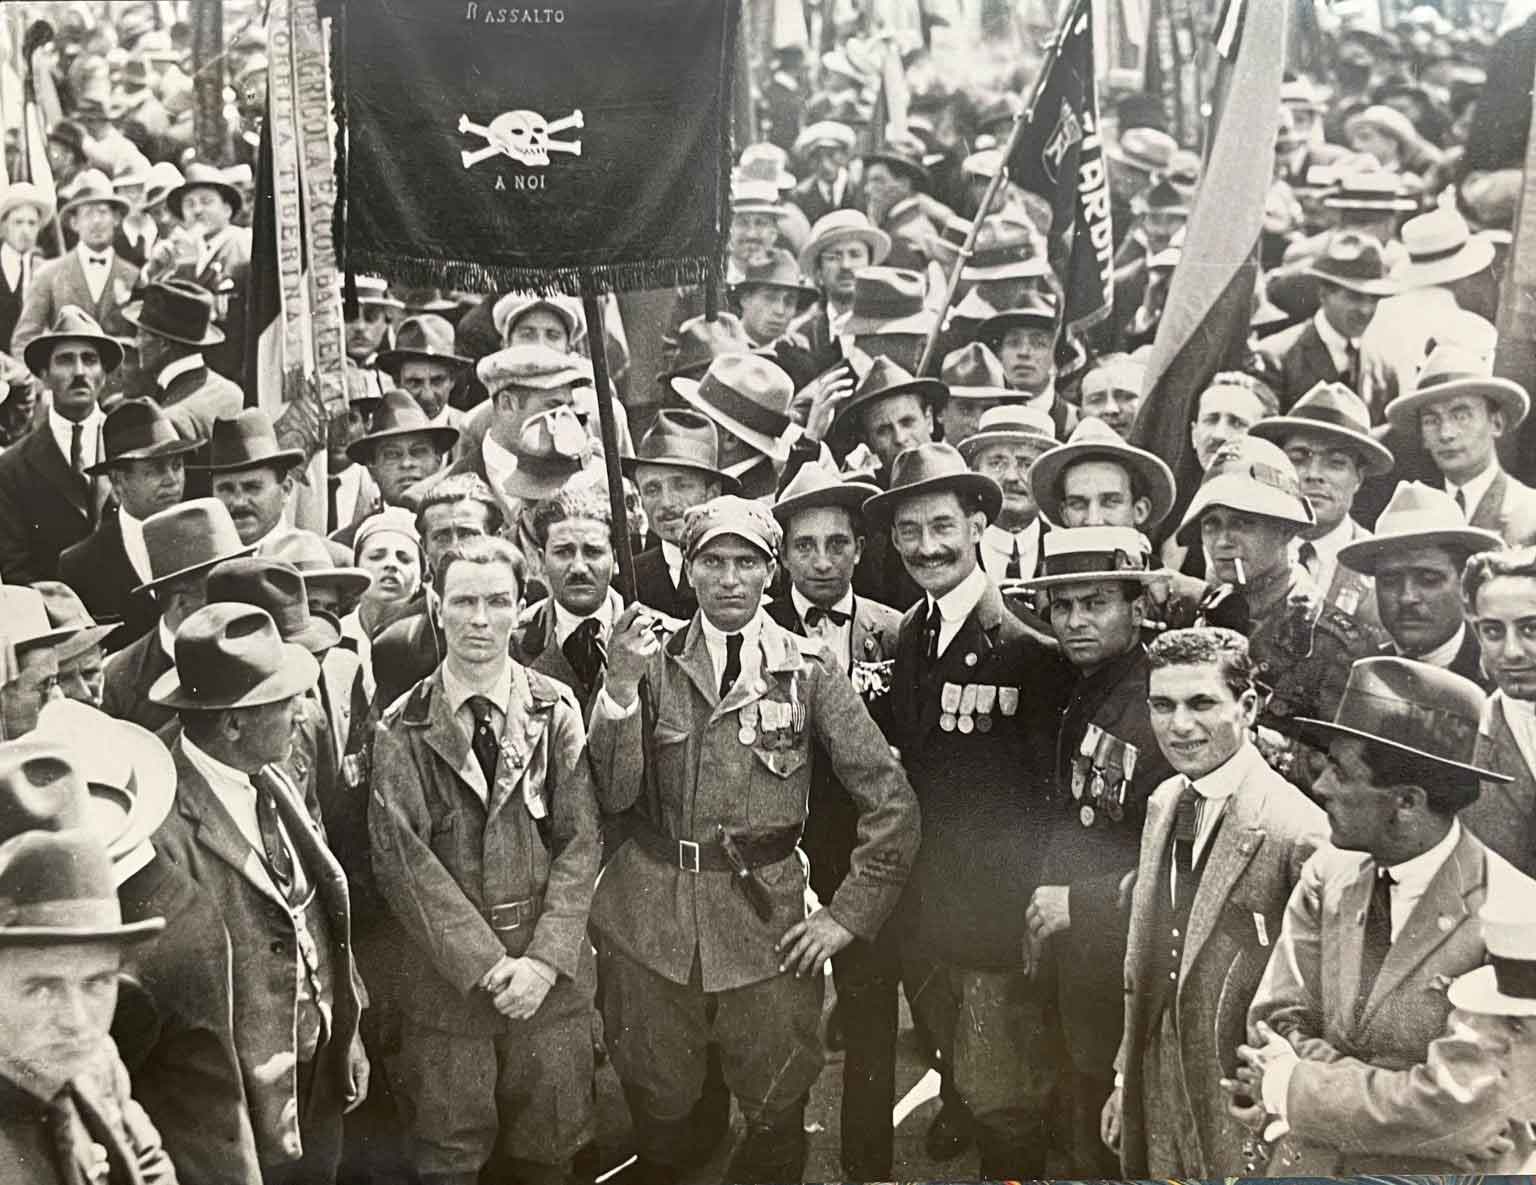 Adunata degli Arditi, Roma 1920